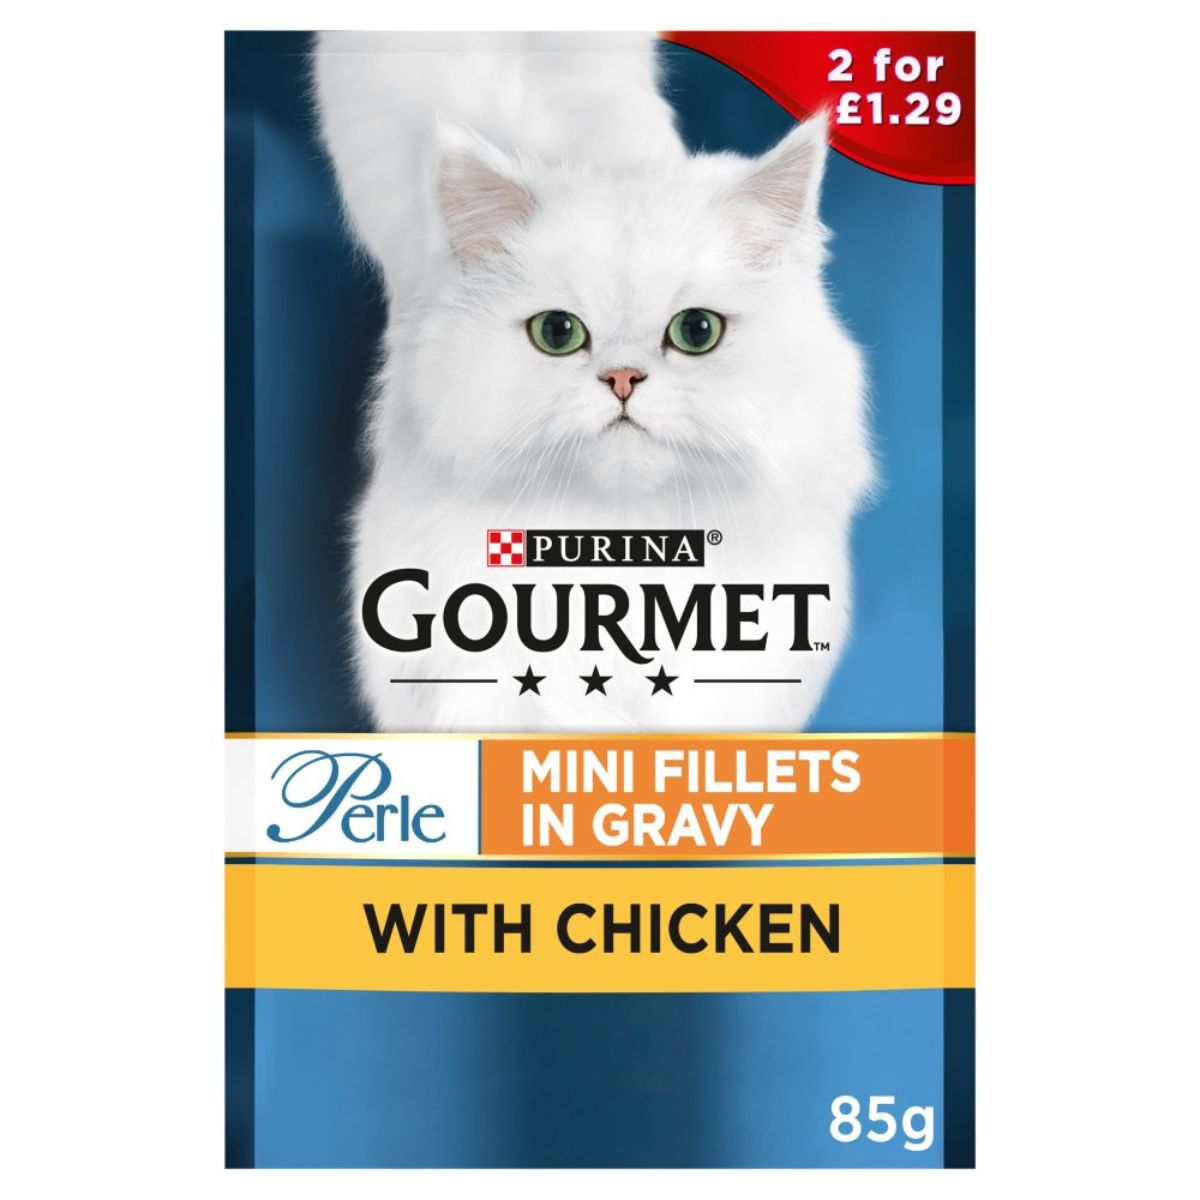 Purina Gourmet - Mini Fillet in Gravy with Chicken - 85g.